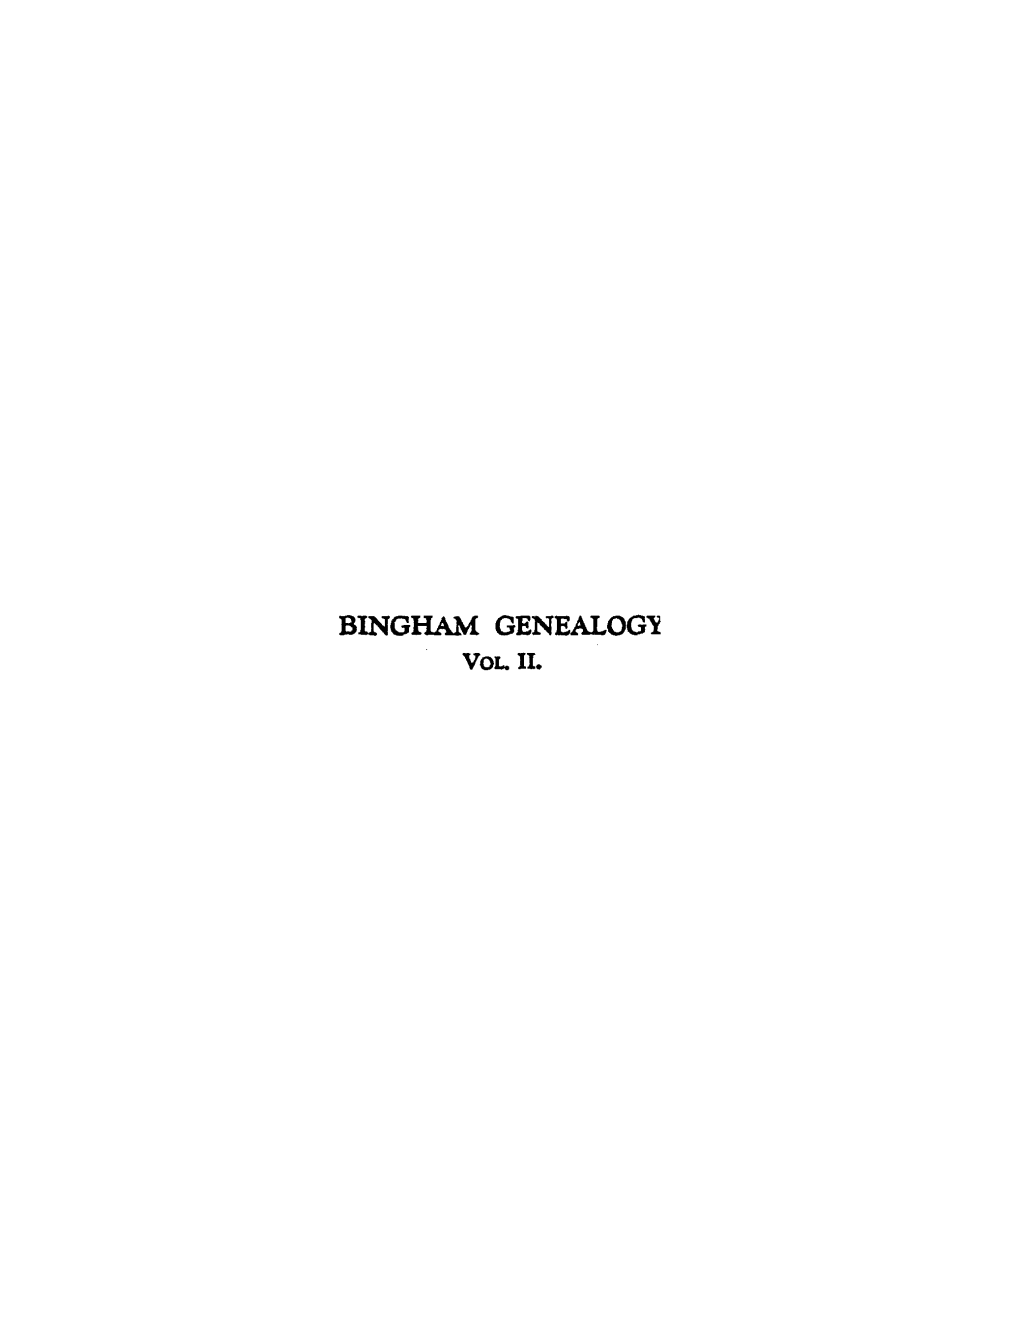 BINGHAM Genealogl VOL II